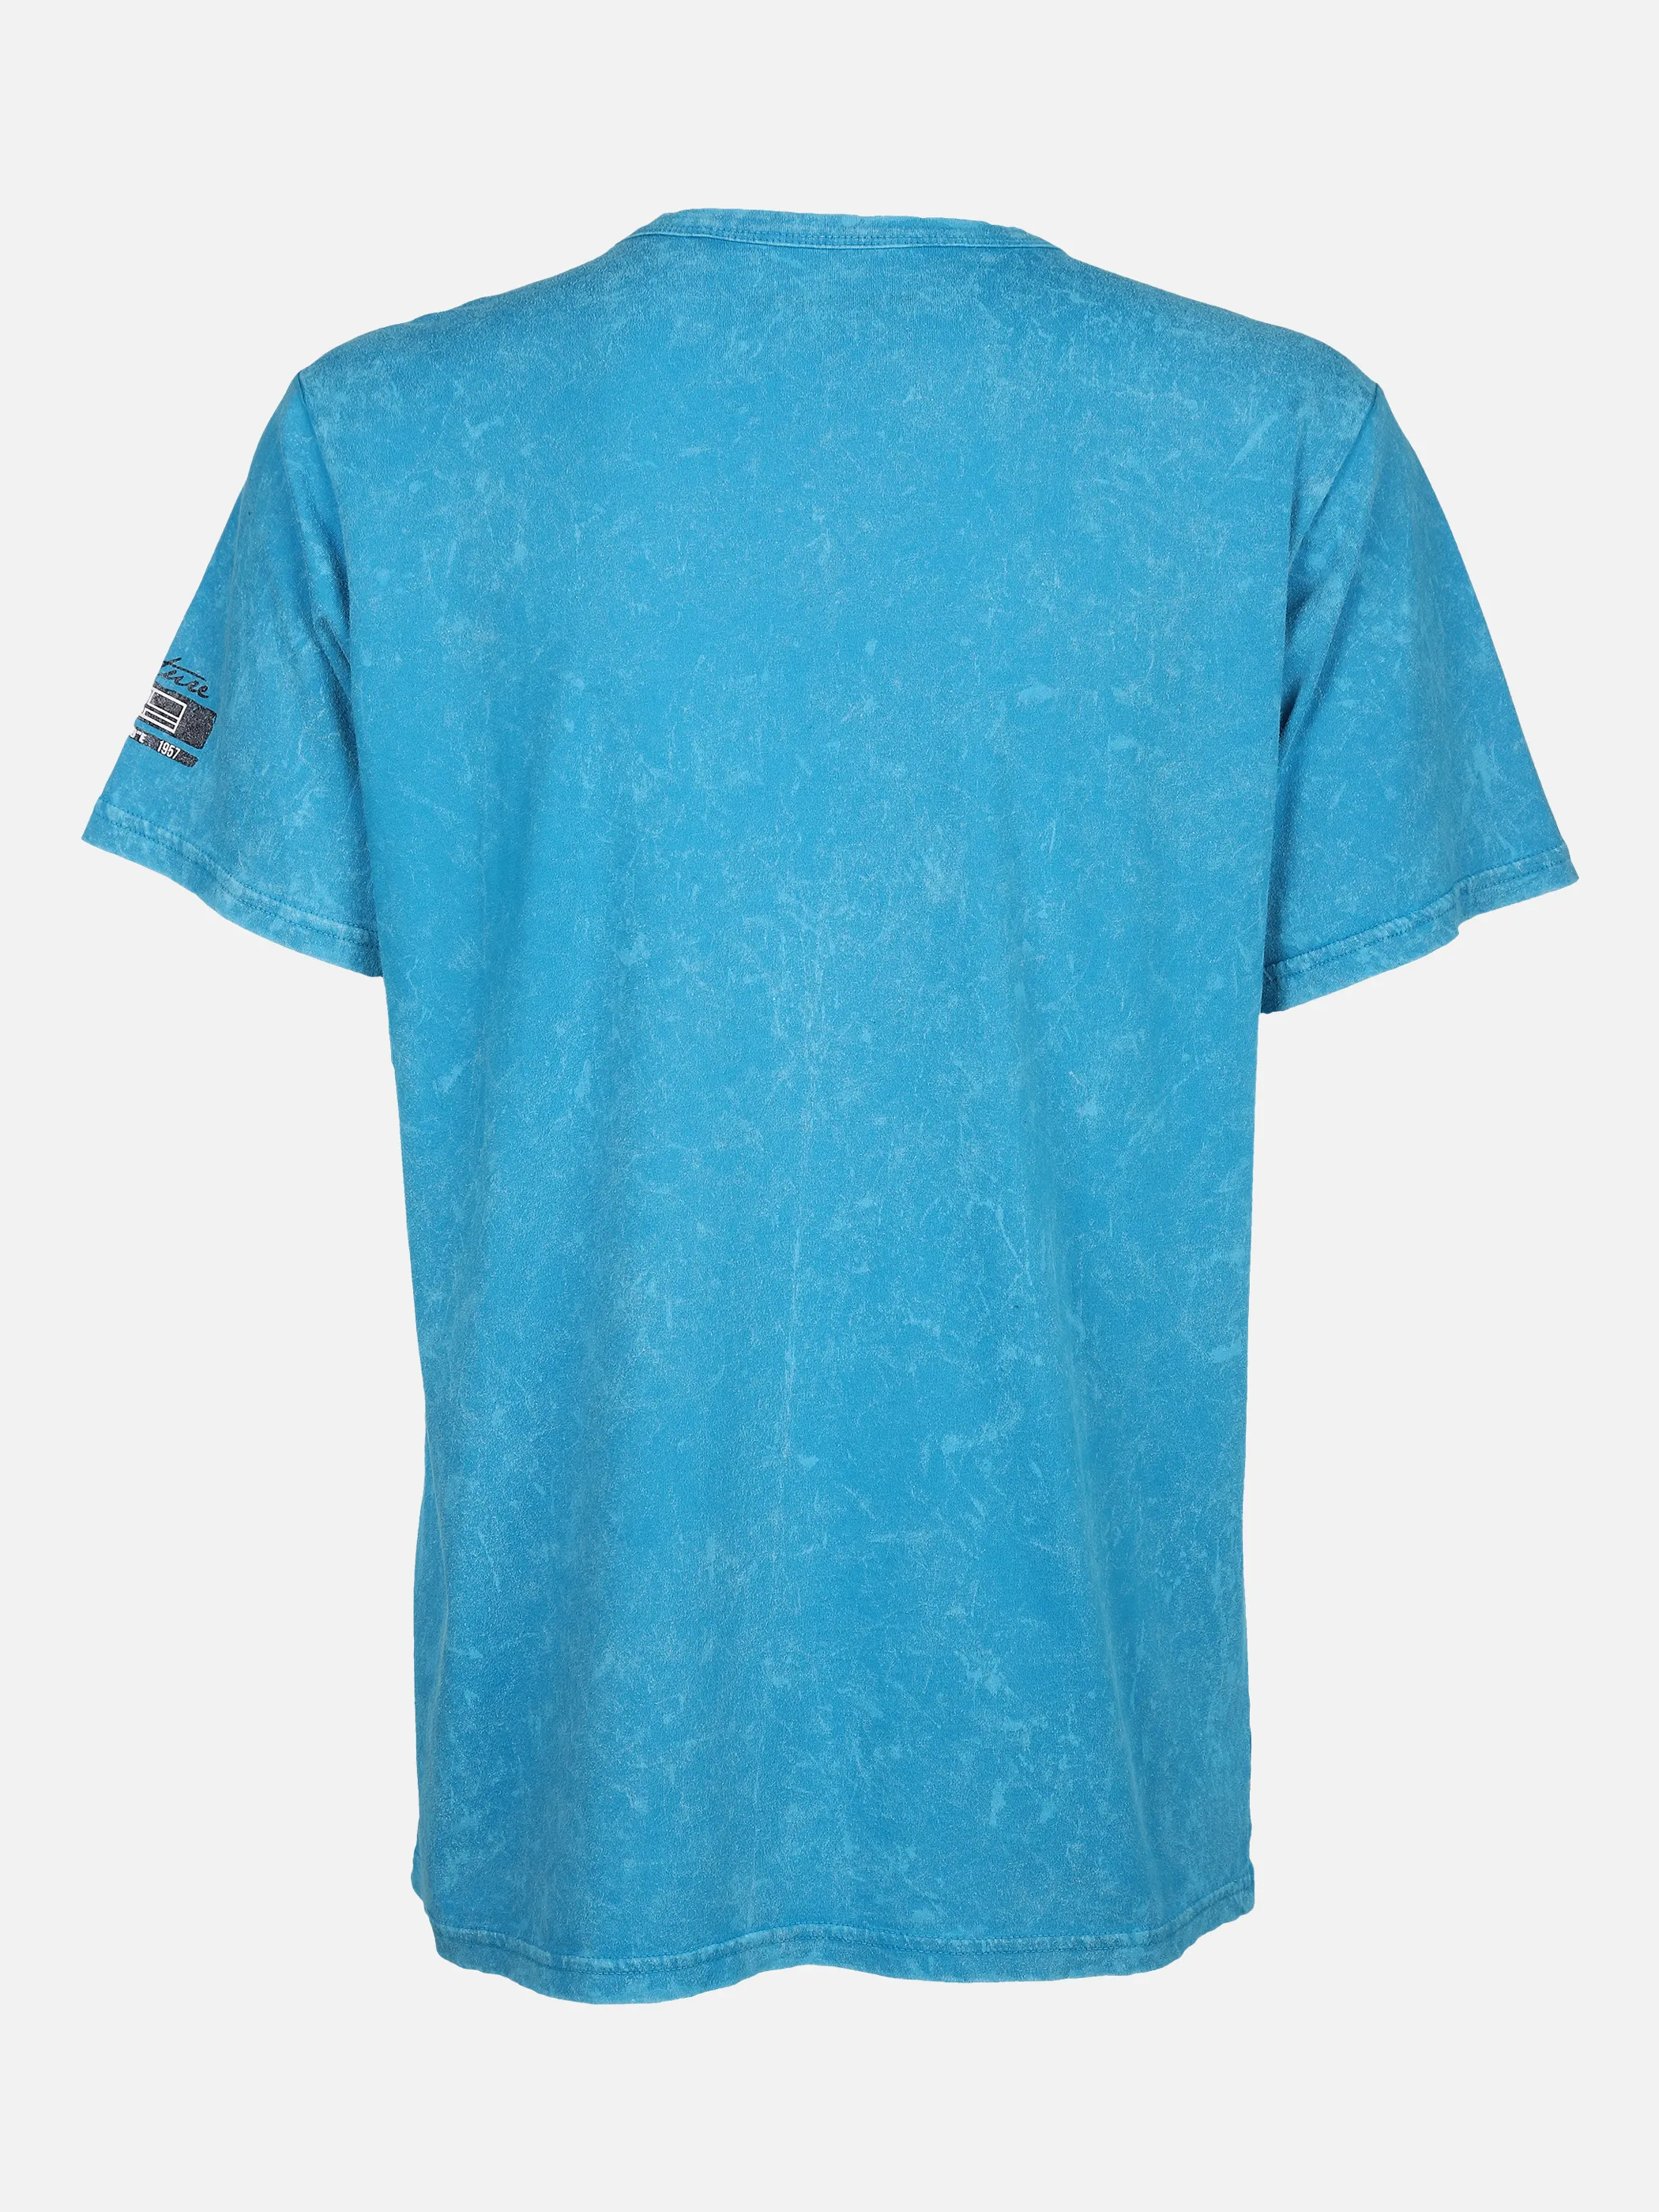 Southern Territory He. T-Shirt 1/2 Arm print acid Blau 852729 AQUA 2